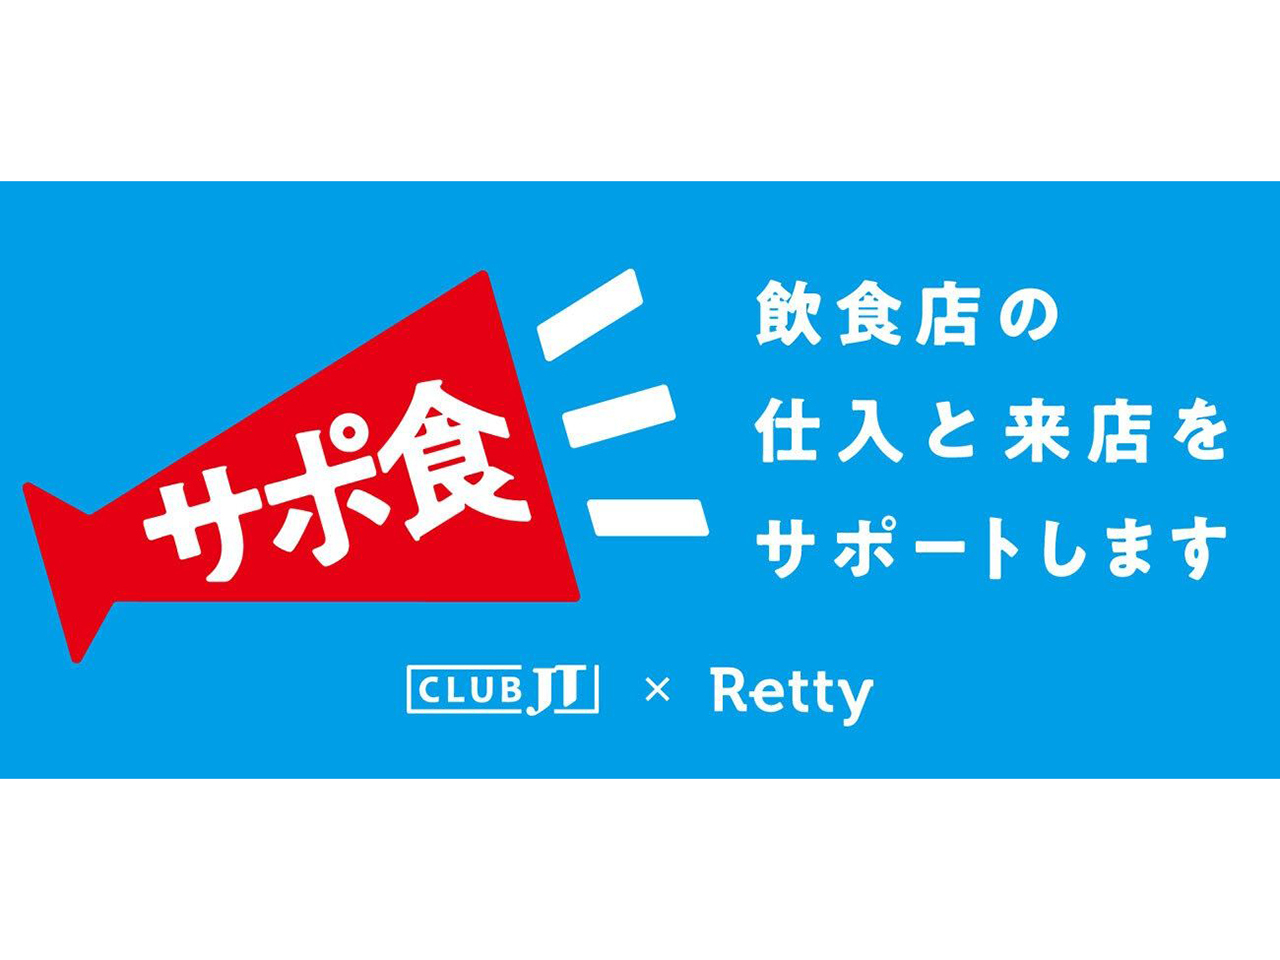 Rettyとclub Jt 飲食店に運営支援金を提供する サポ食 3万円を上限に Cnet Japan